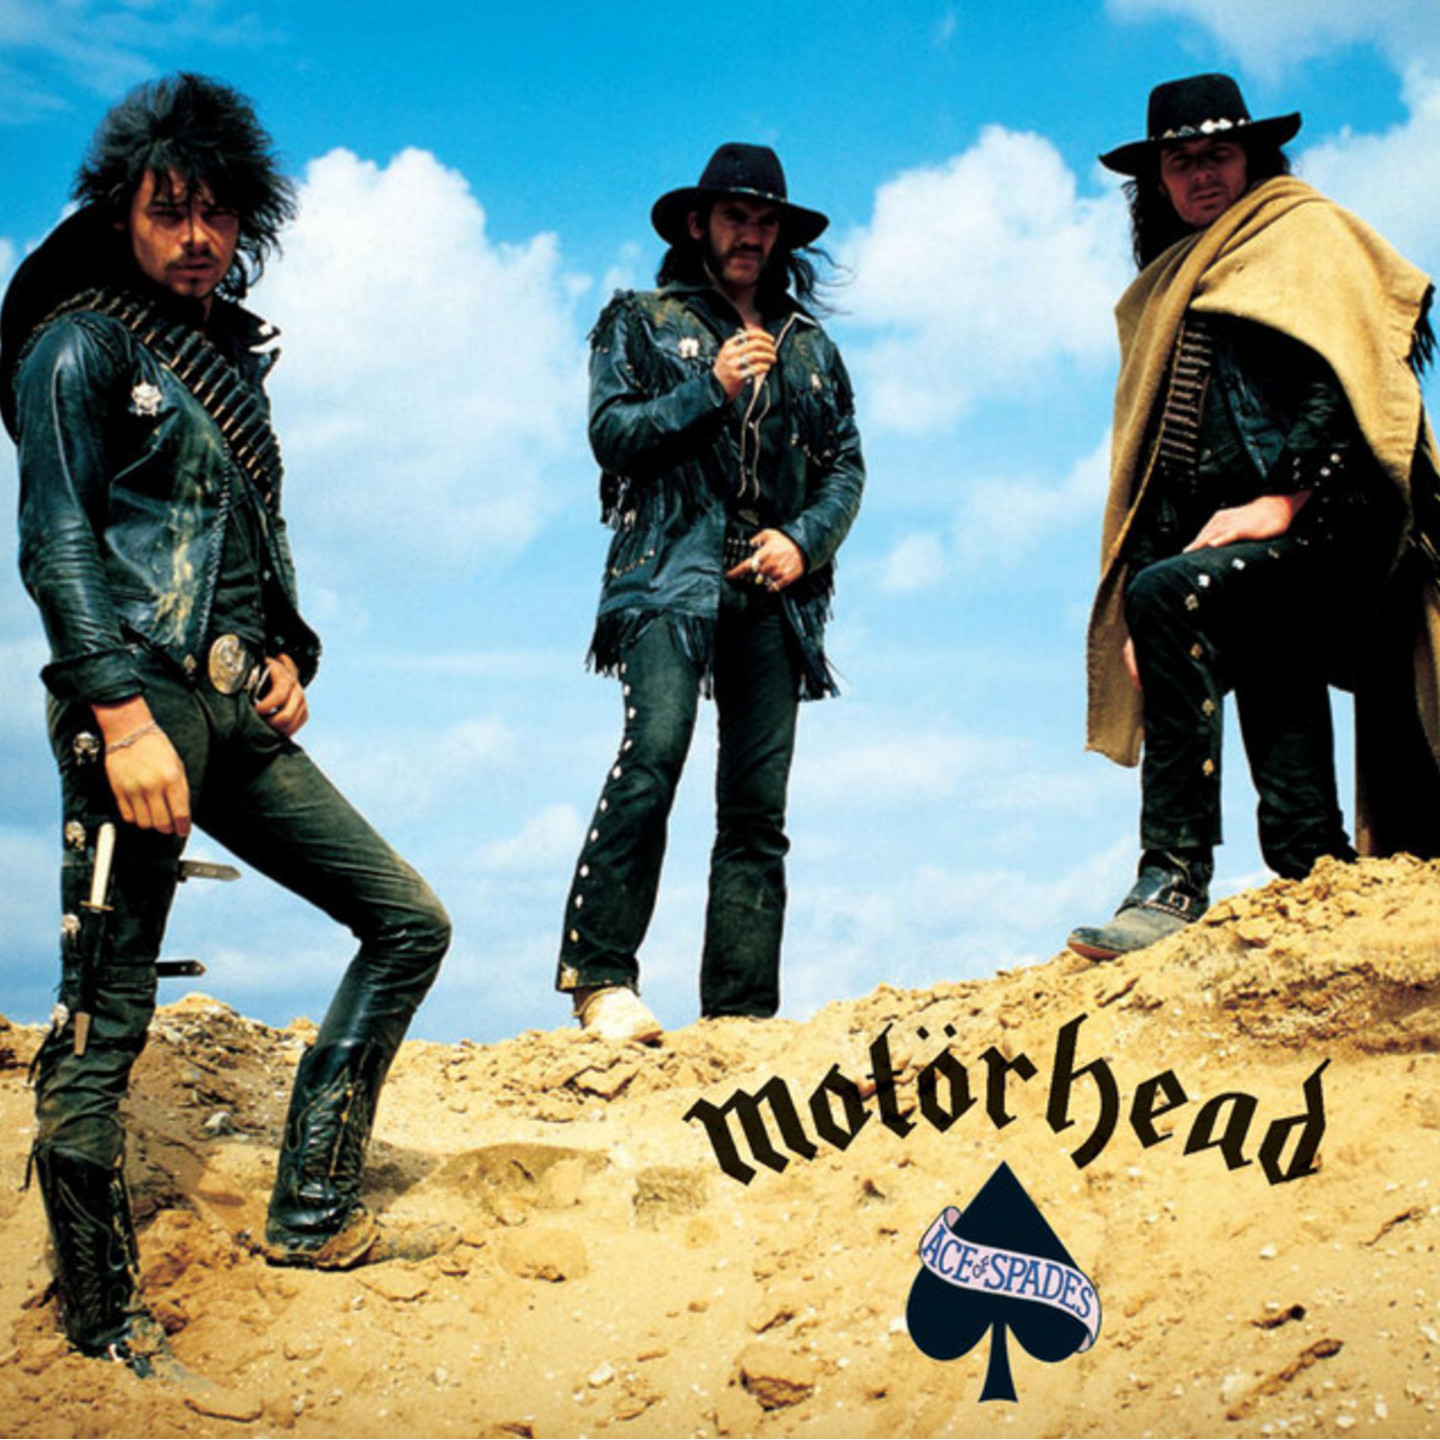 MOTORHEAD - Ace Of Spades LP